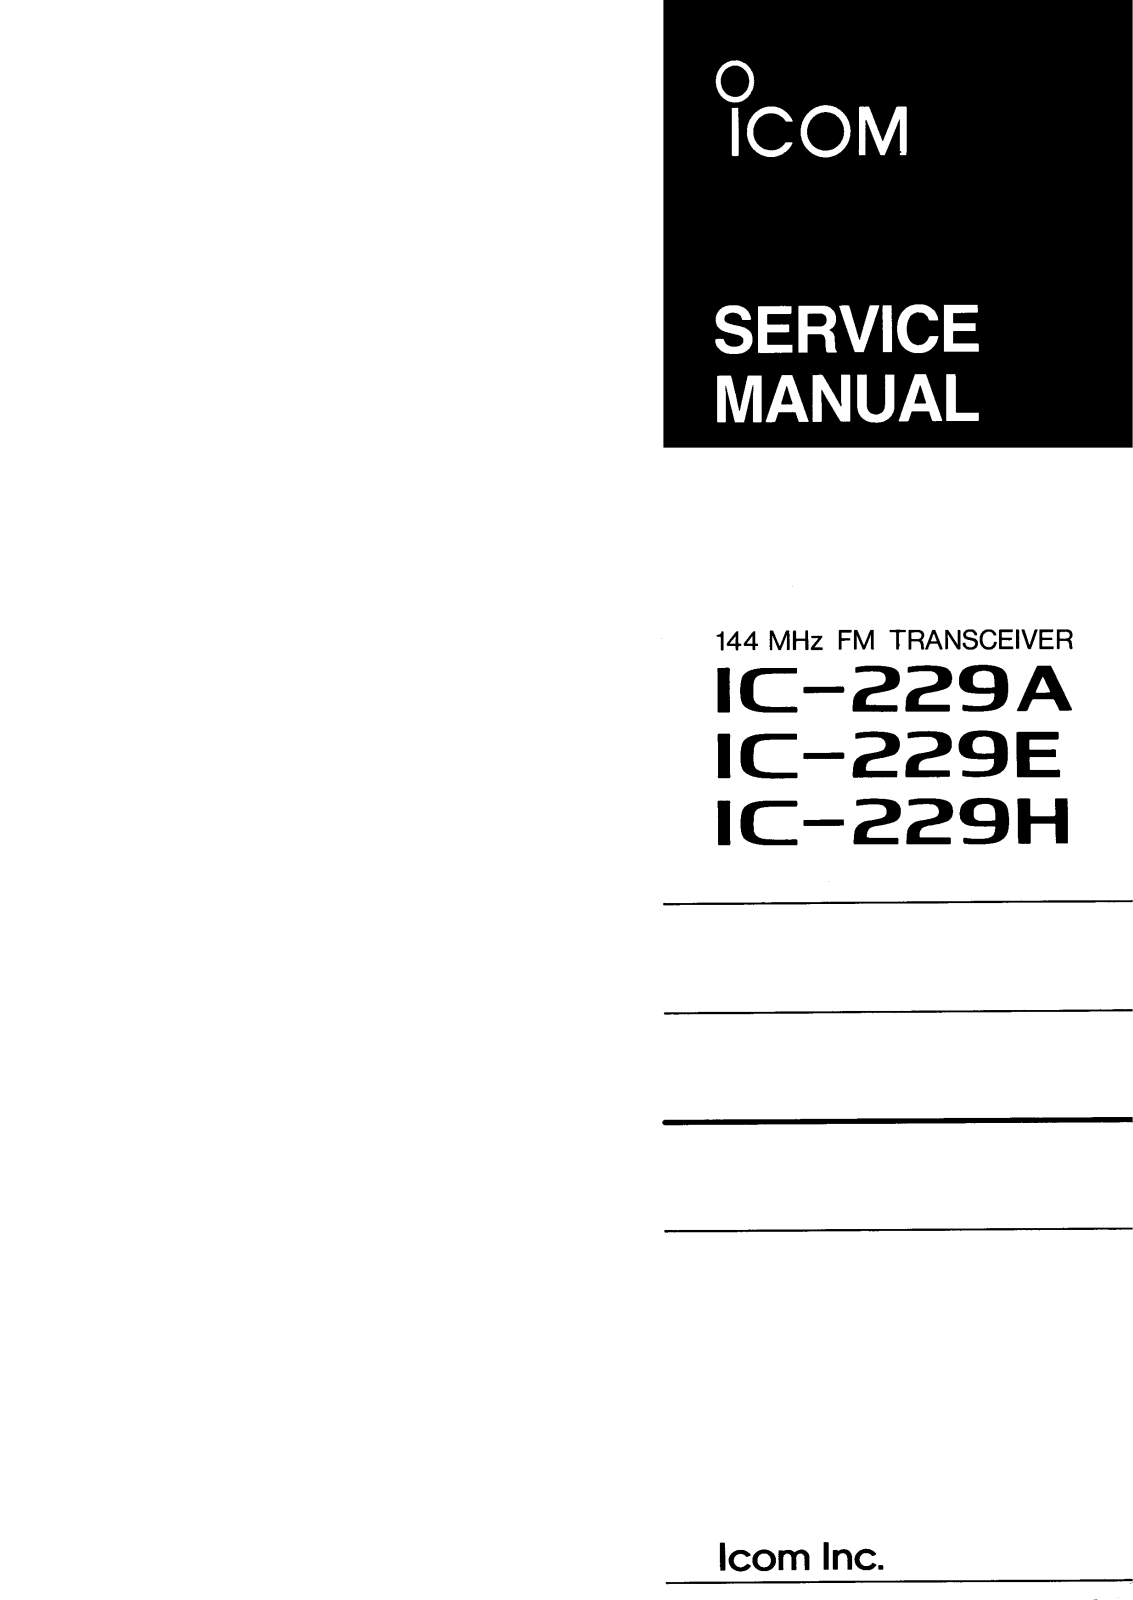 Icom IC-229H, IC-229E, IC-229A Service Manual